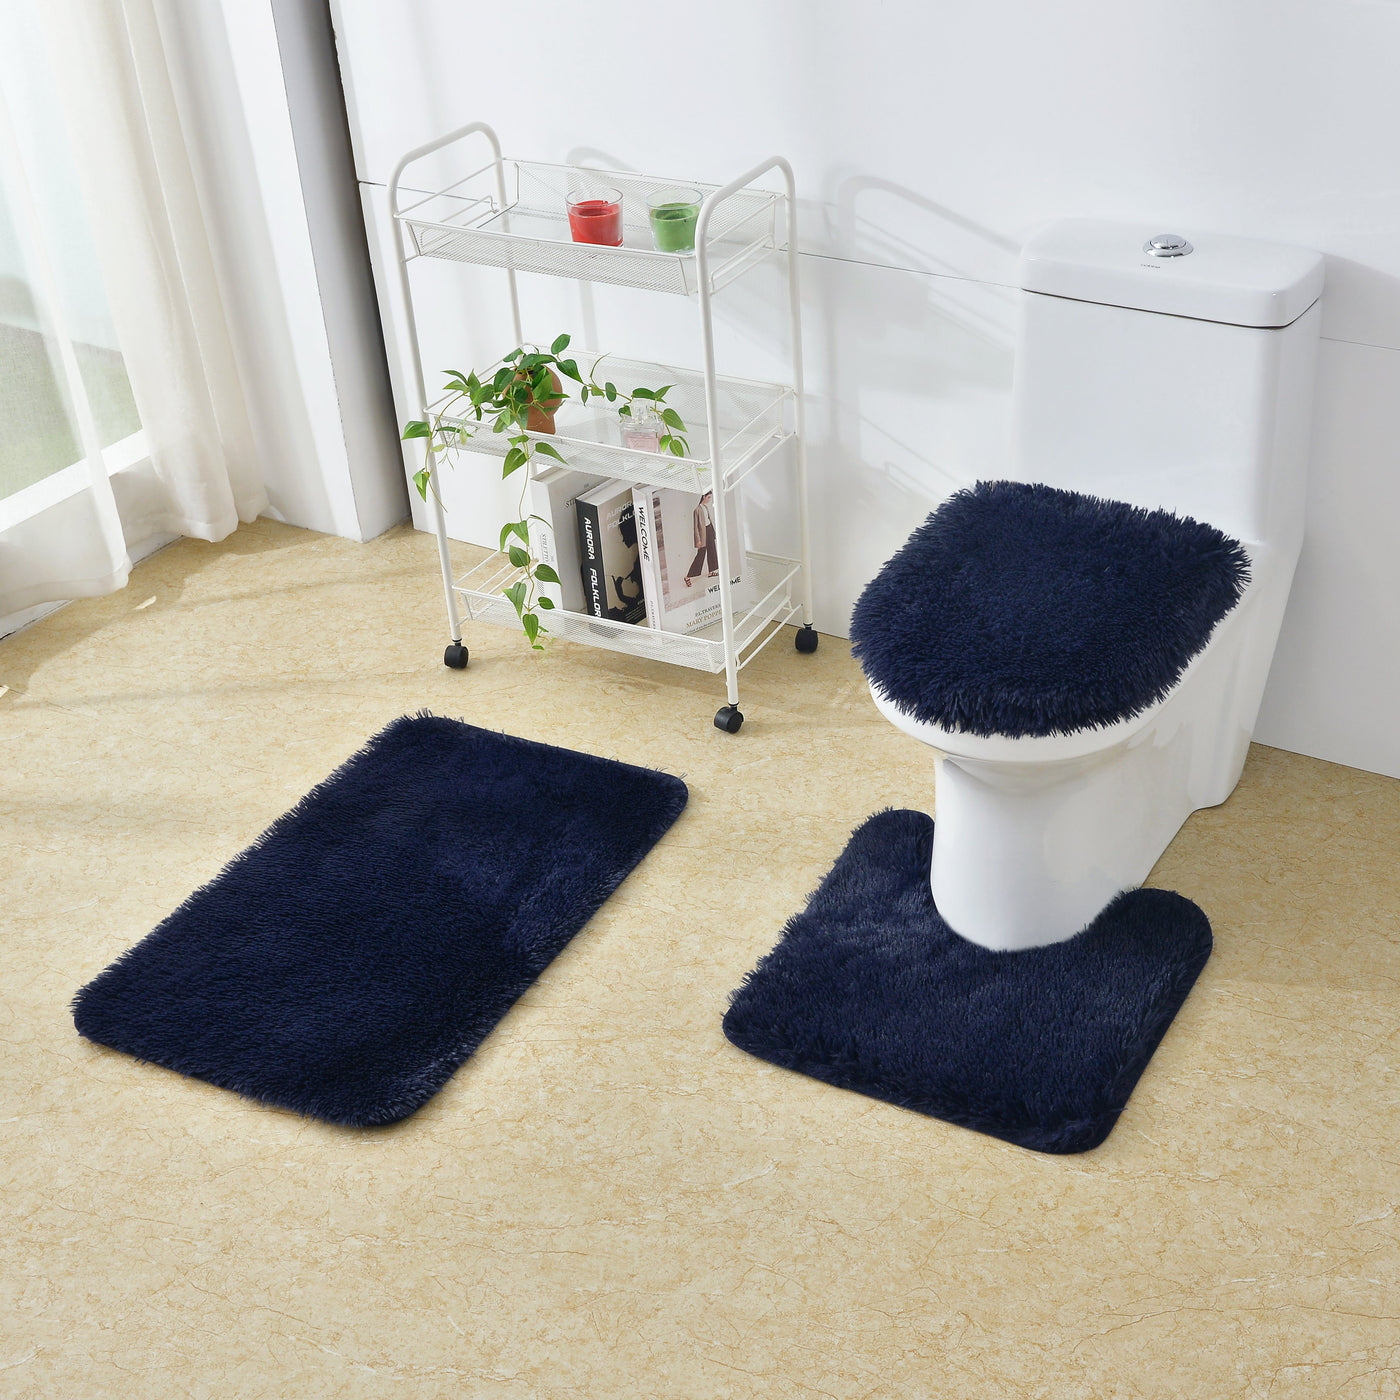 1pc/2pc/3pc Fluffy Bathroom Shaggy Rugs Toilet Lid Bathroom Decor Set Soft & Washable - Jenin-Home-Furnishing.CURTAINS